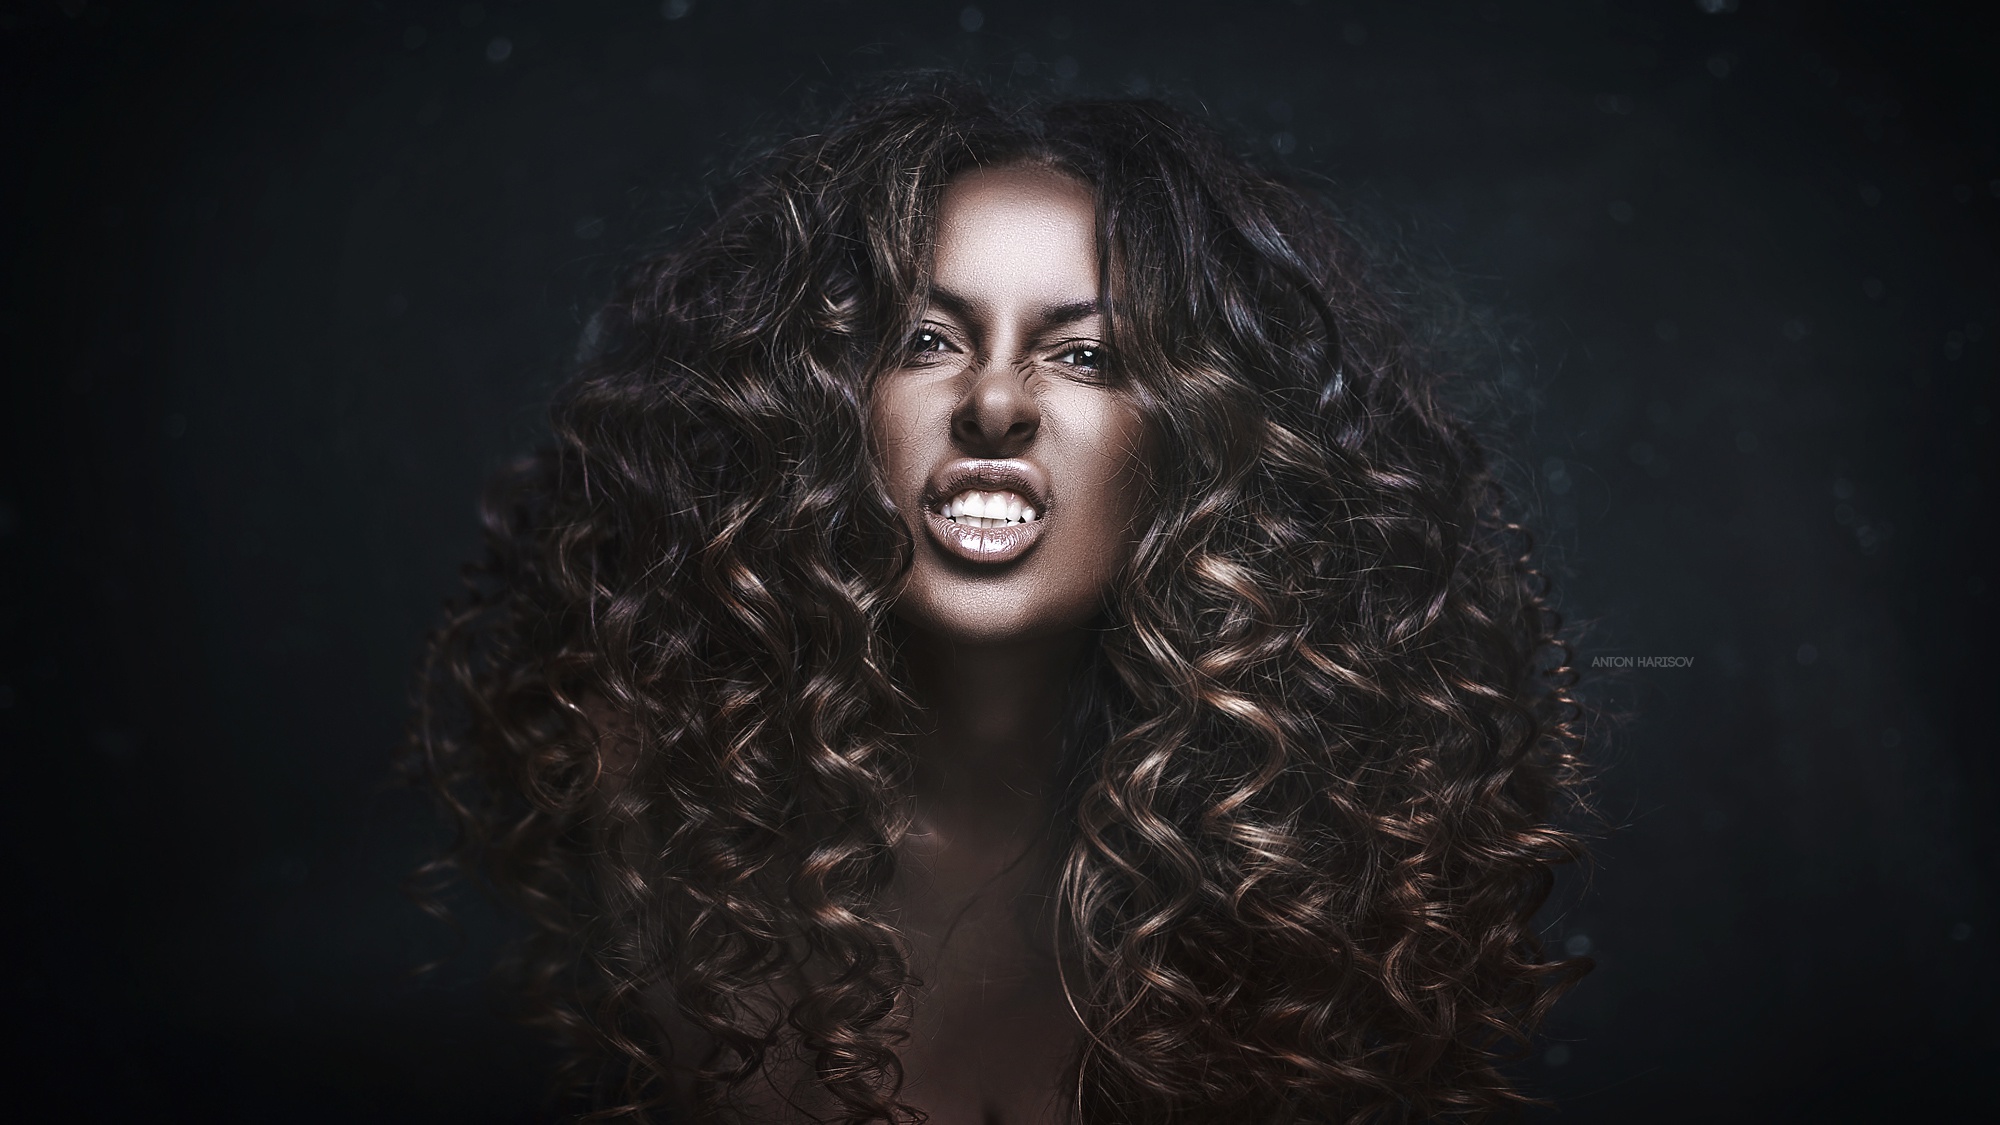 Face Curly Hair Women Portrait Anton Harisov 2000x1125